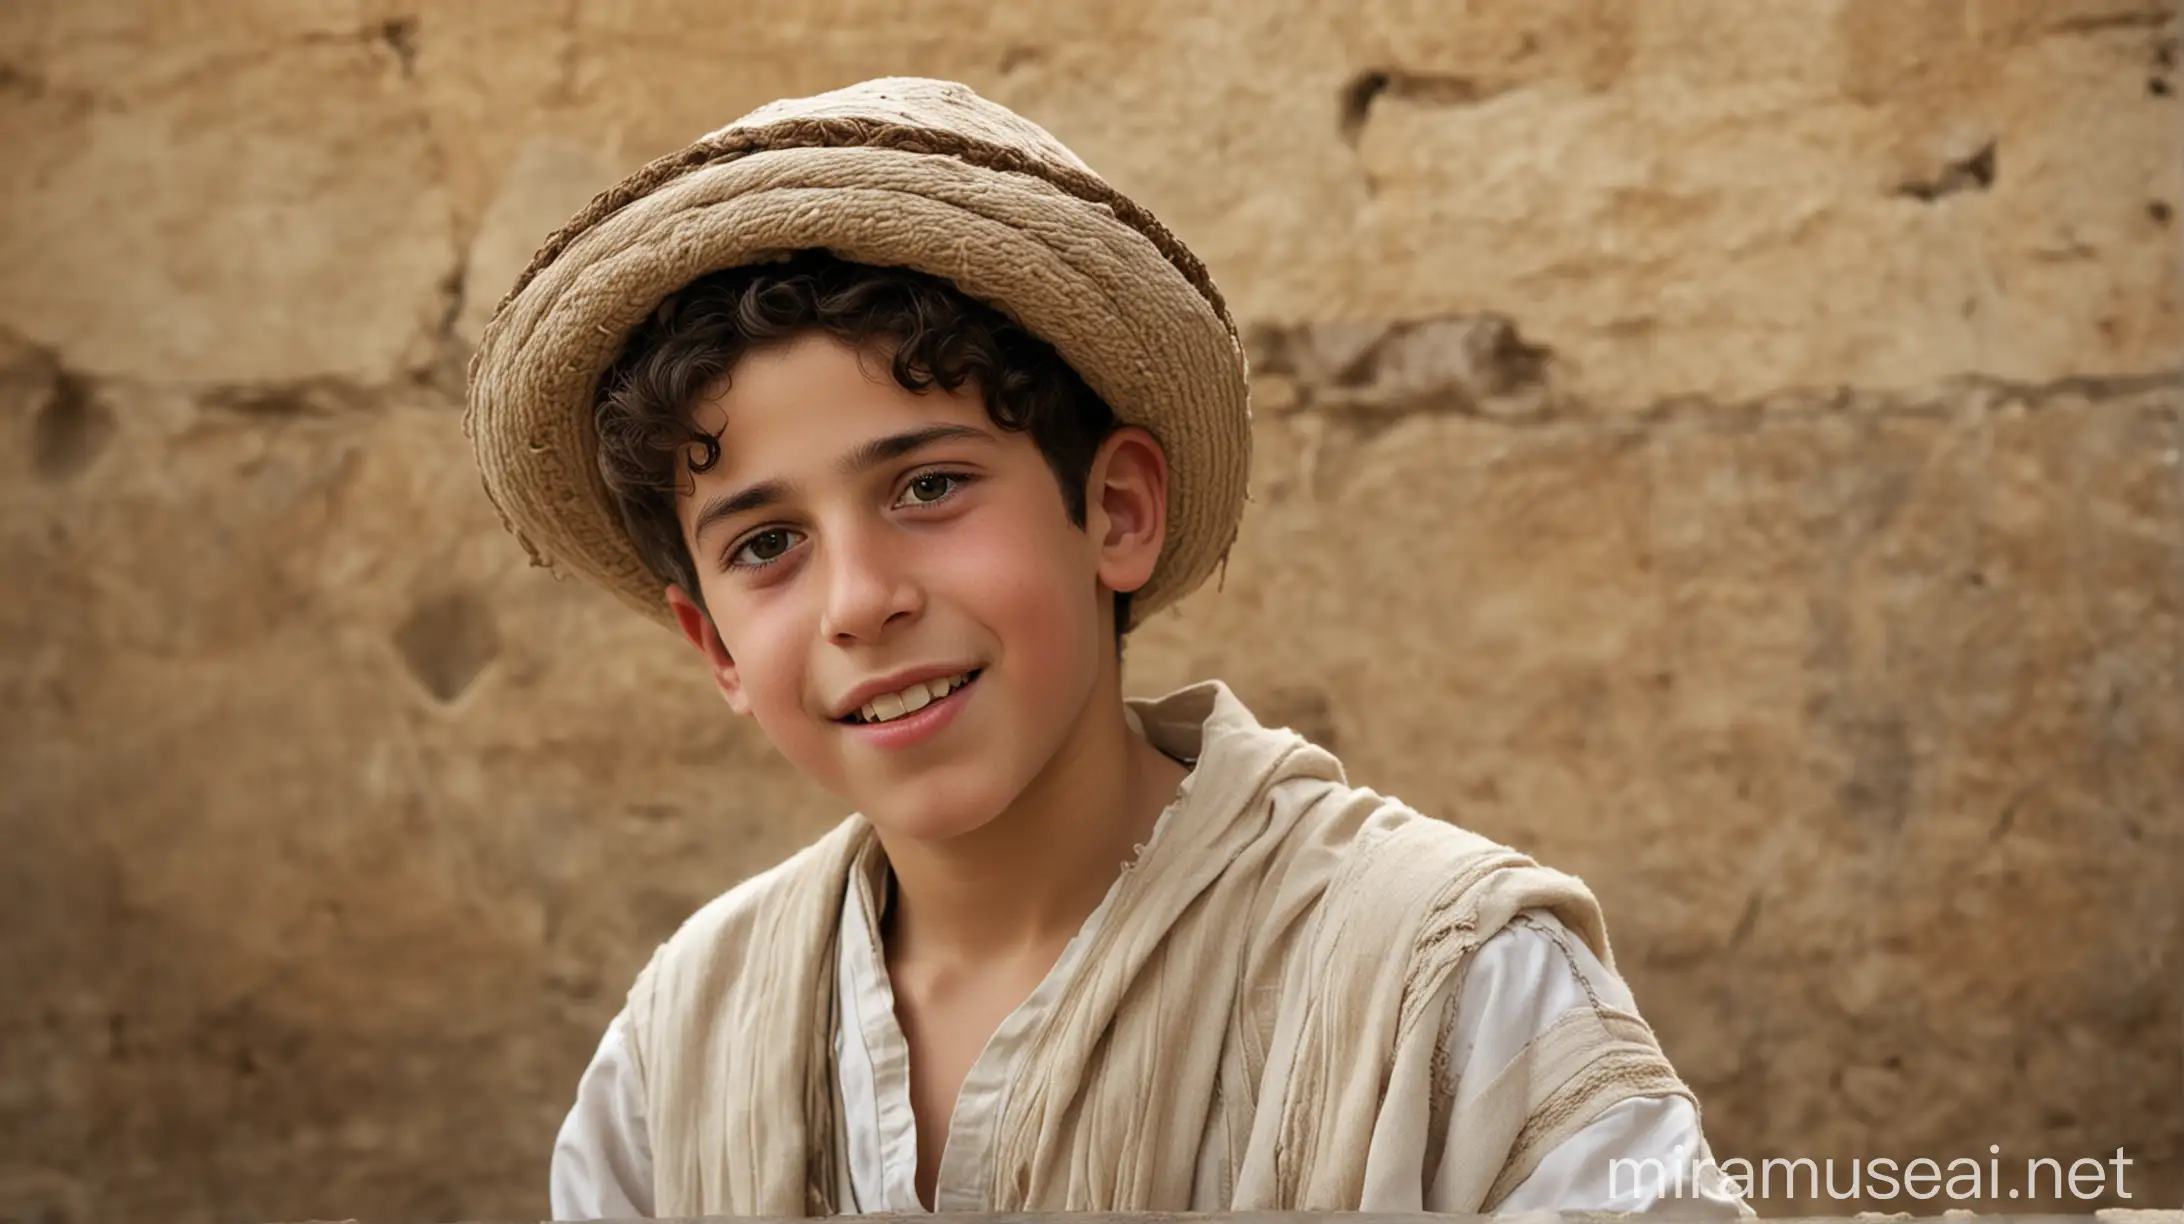 Young Jewish Boy in Ancient Jewish Garb